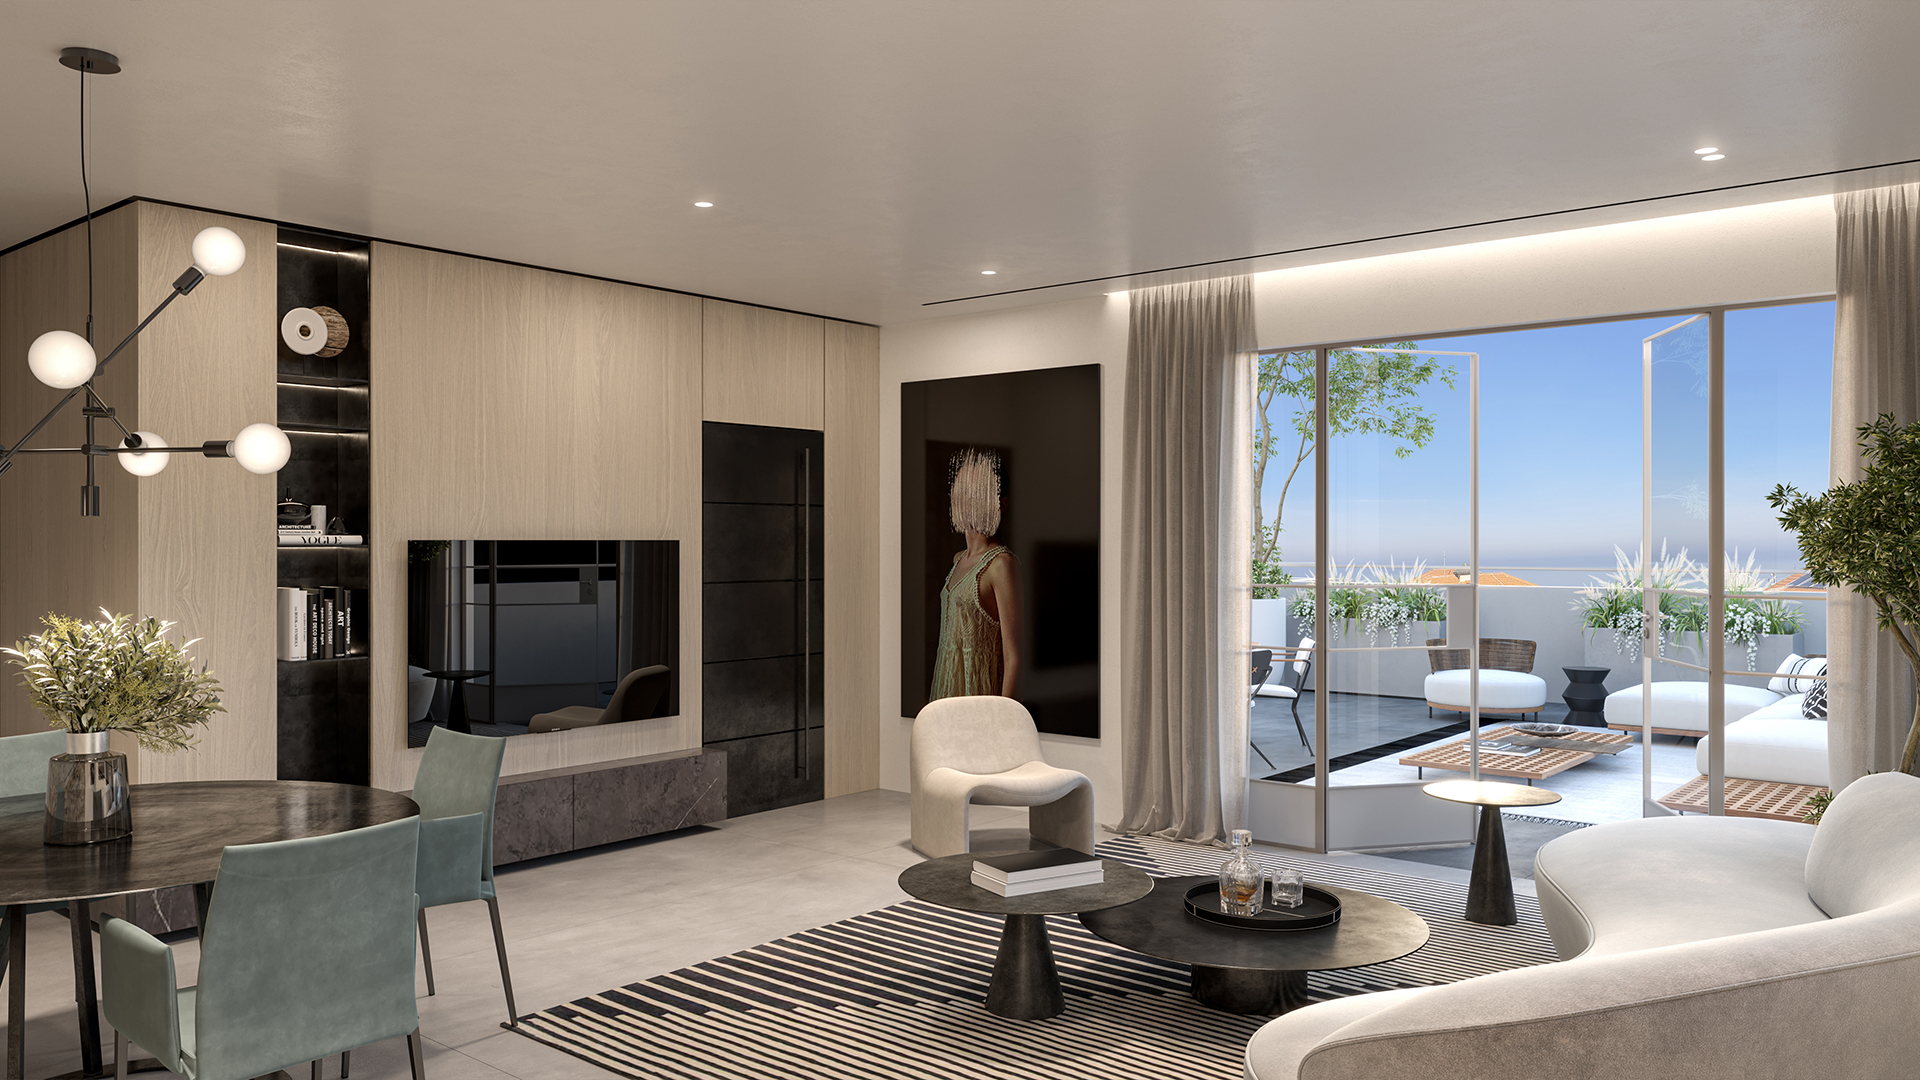 Maayan-Golan_Architectural-Visualization_interior-render_apartment_Living-room-kitchen-dining_03